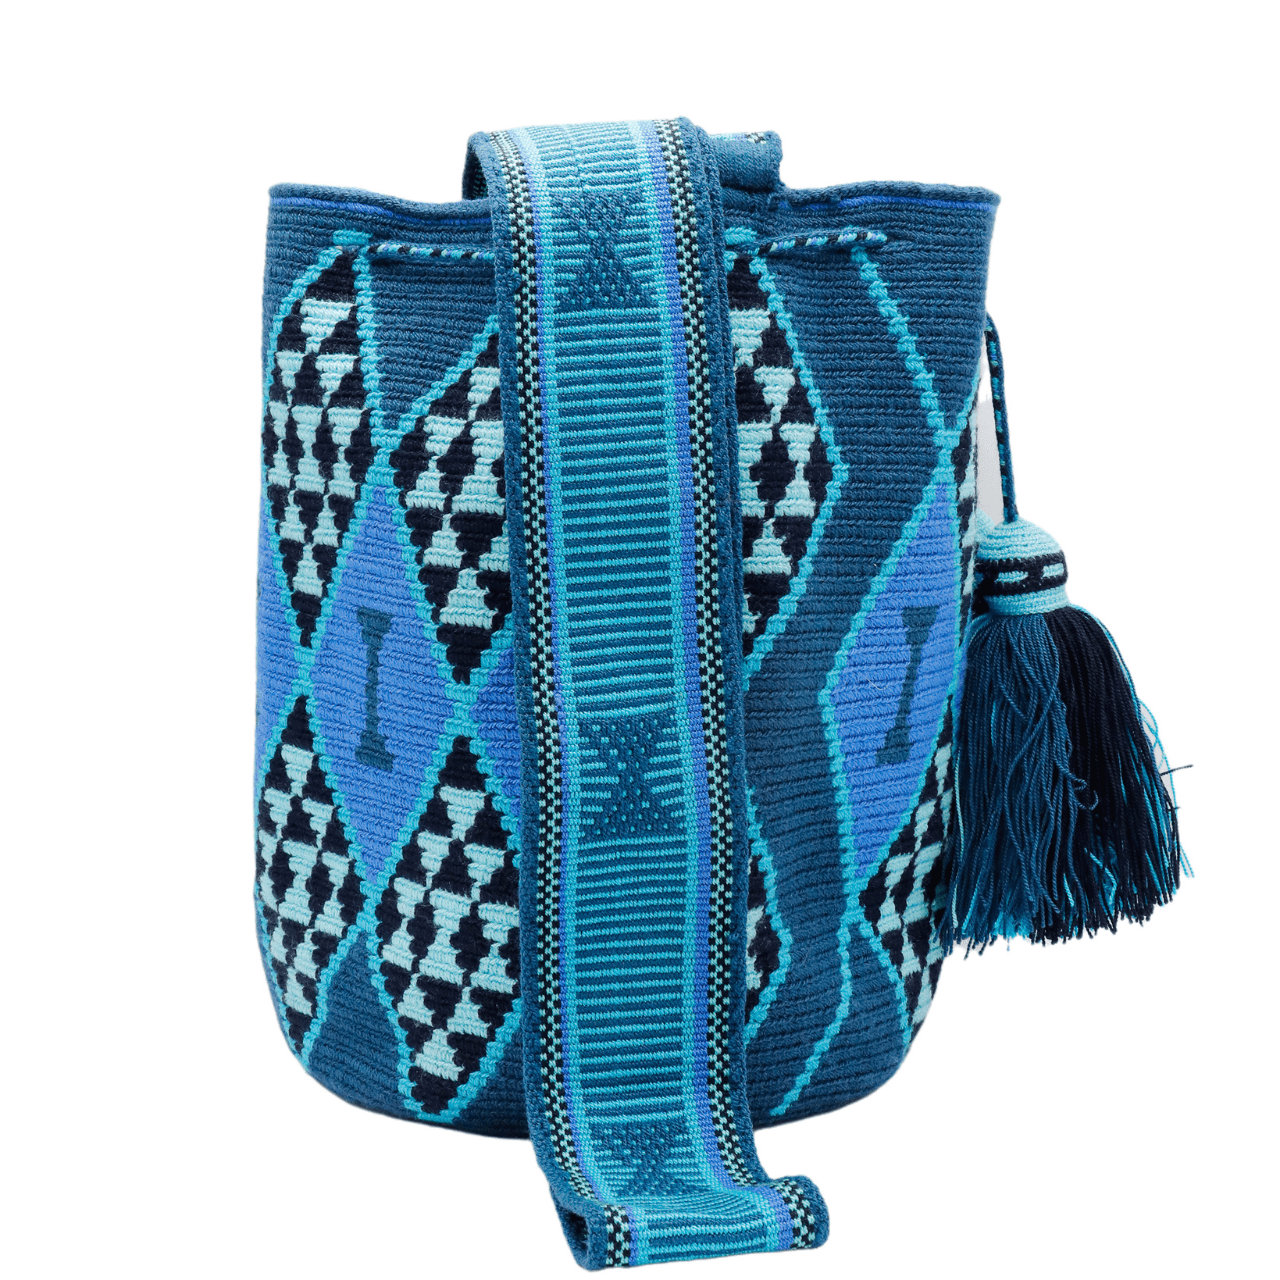 Flora Wayuu bags showcasing a range of blue shades and distinctive diamond patterns.